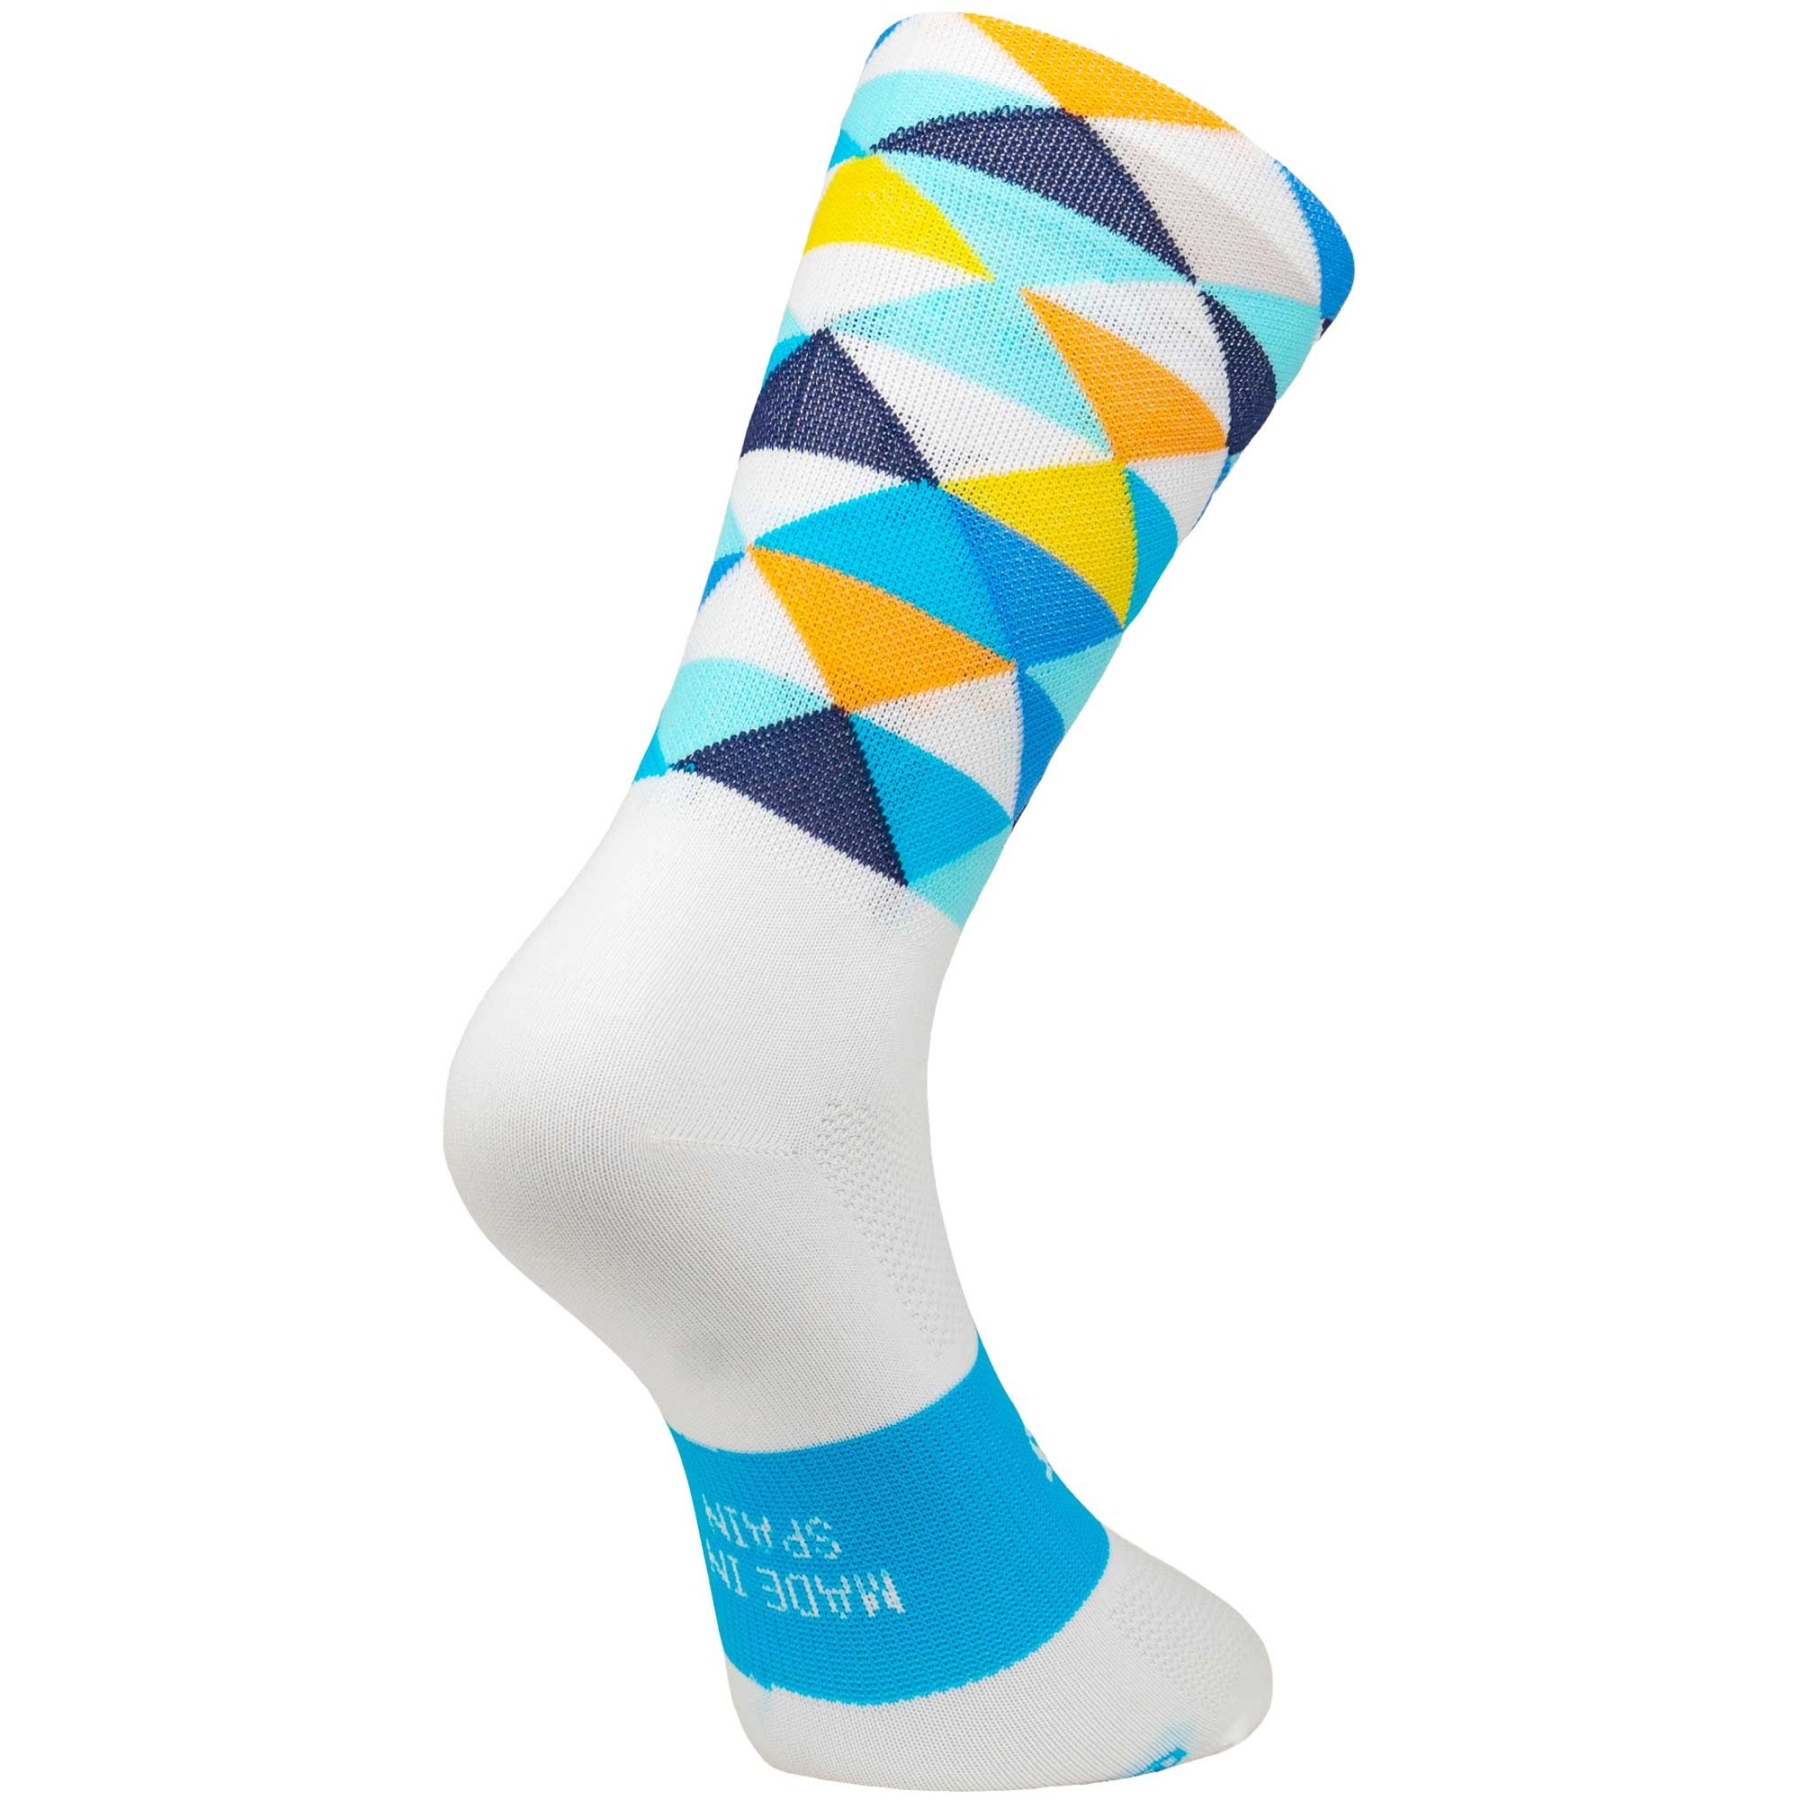 Produktbild von SPORCKS Cycling Socken - Coll De Rates Blue